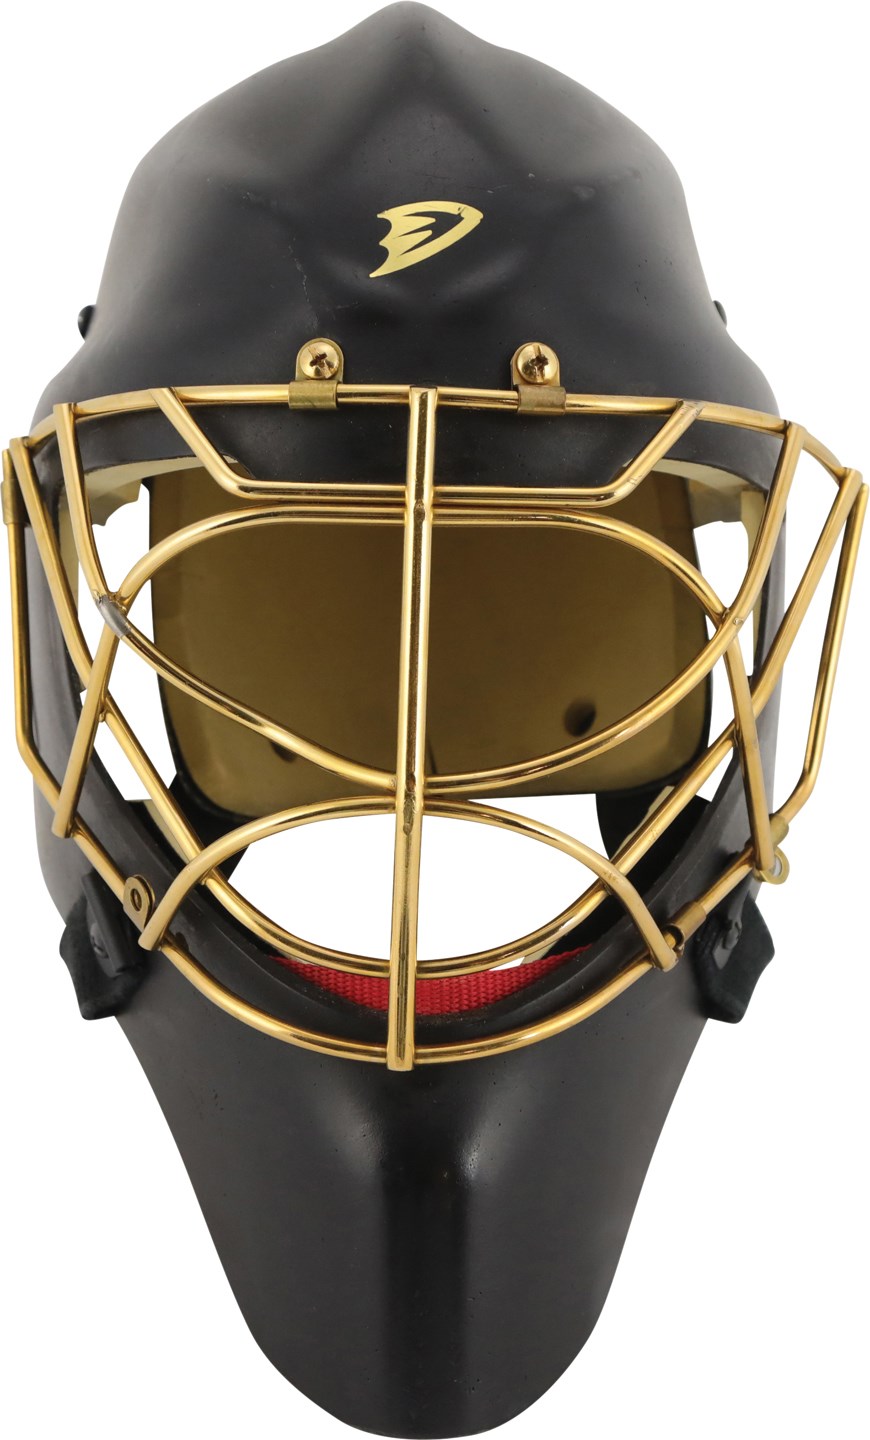 Circa 2010 Jonas Hiller Anaheim Ducks Game Used Goalie's Mask